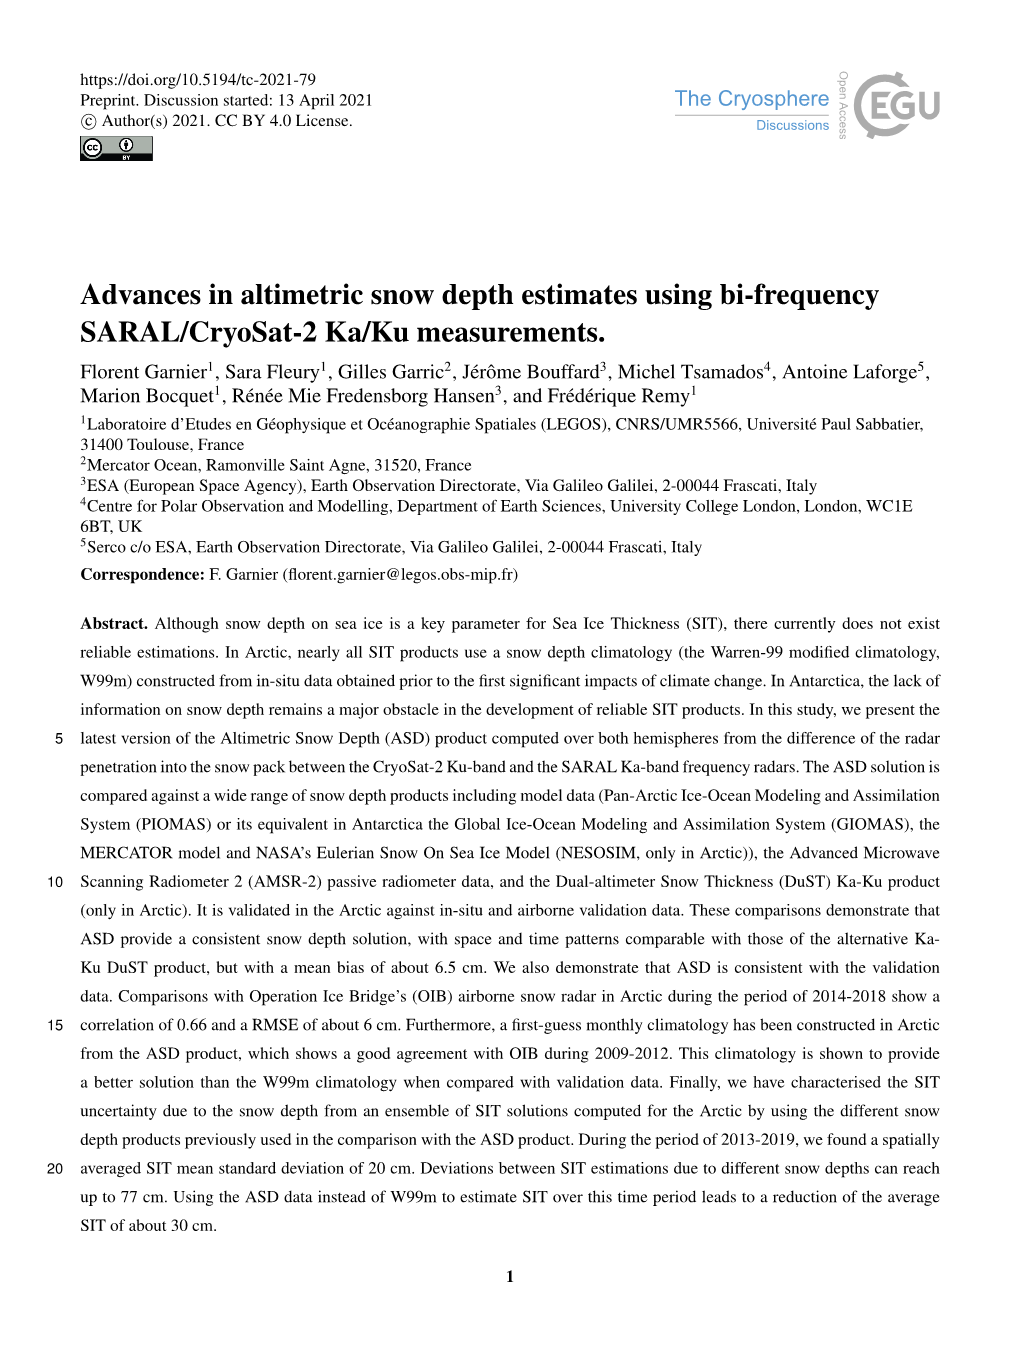 Advances in Altimetric Snow Depth Estimates Using Bi-Frequency SARAL/Cryosat-2 Ka/Ku Measurements